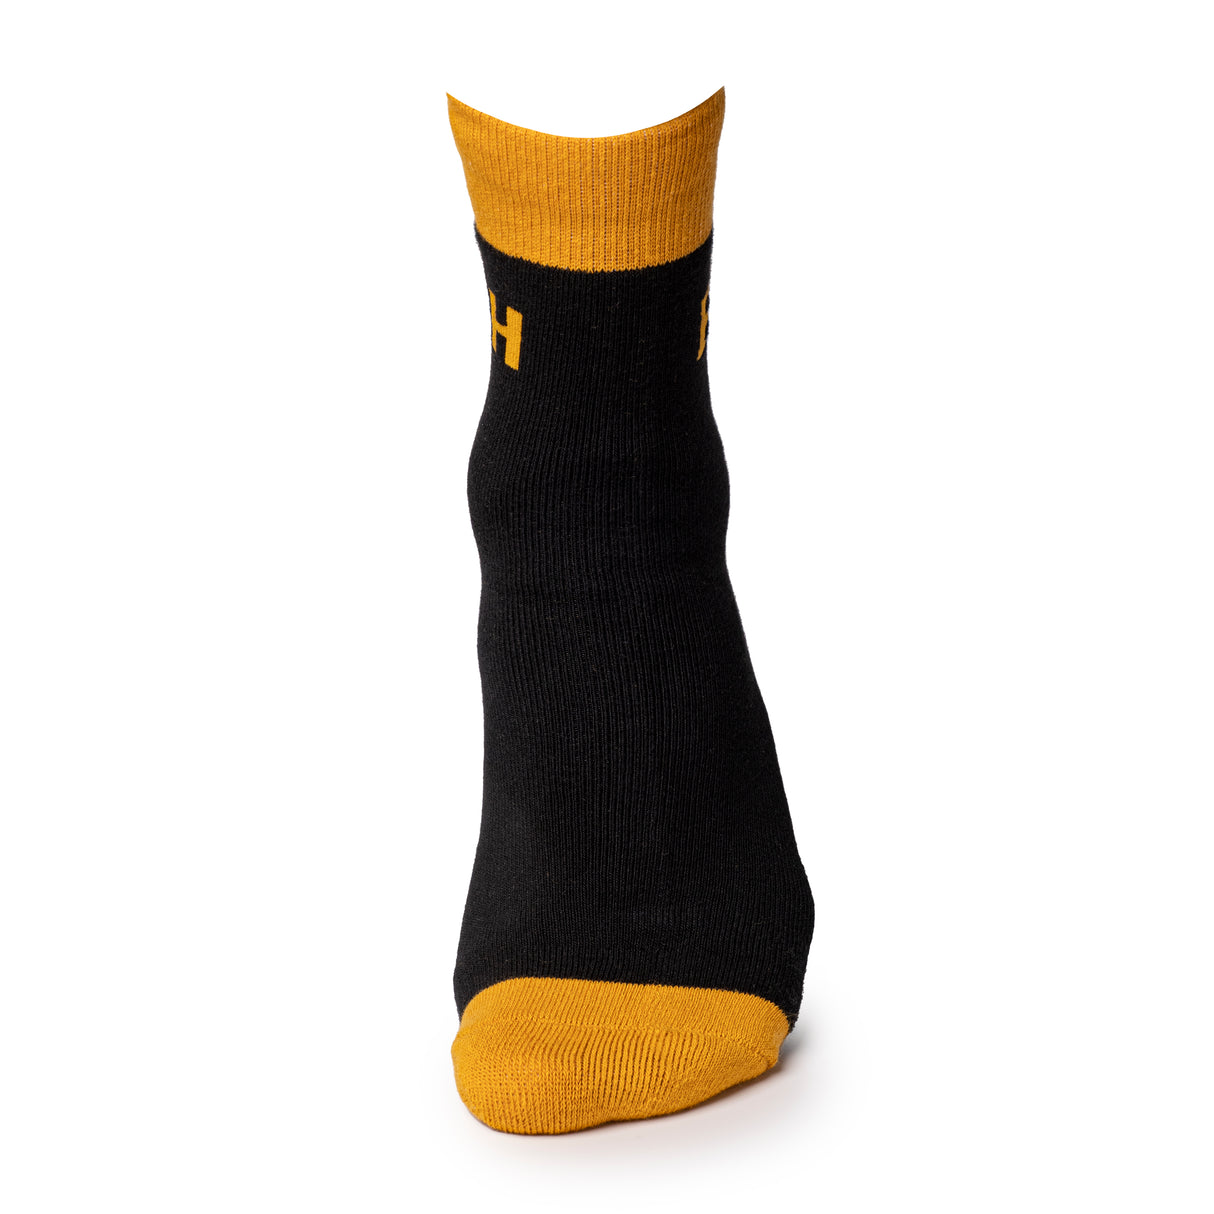 Black Hammer Endura Comfort Mens Work Socks x4 Pairs